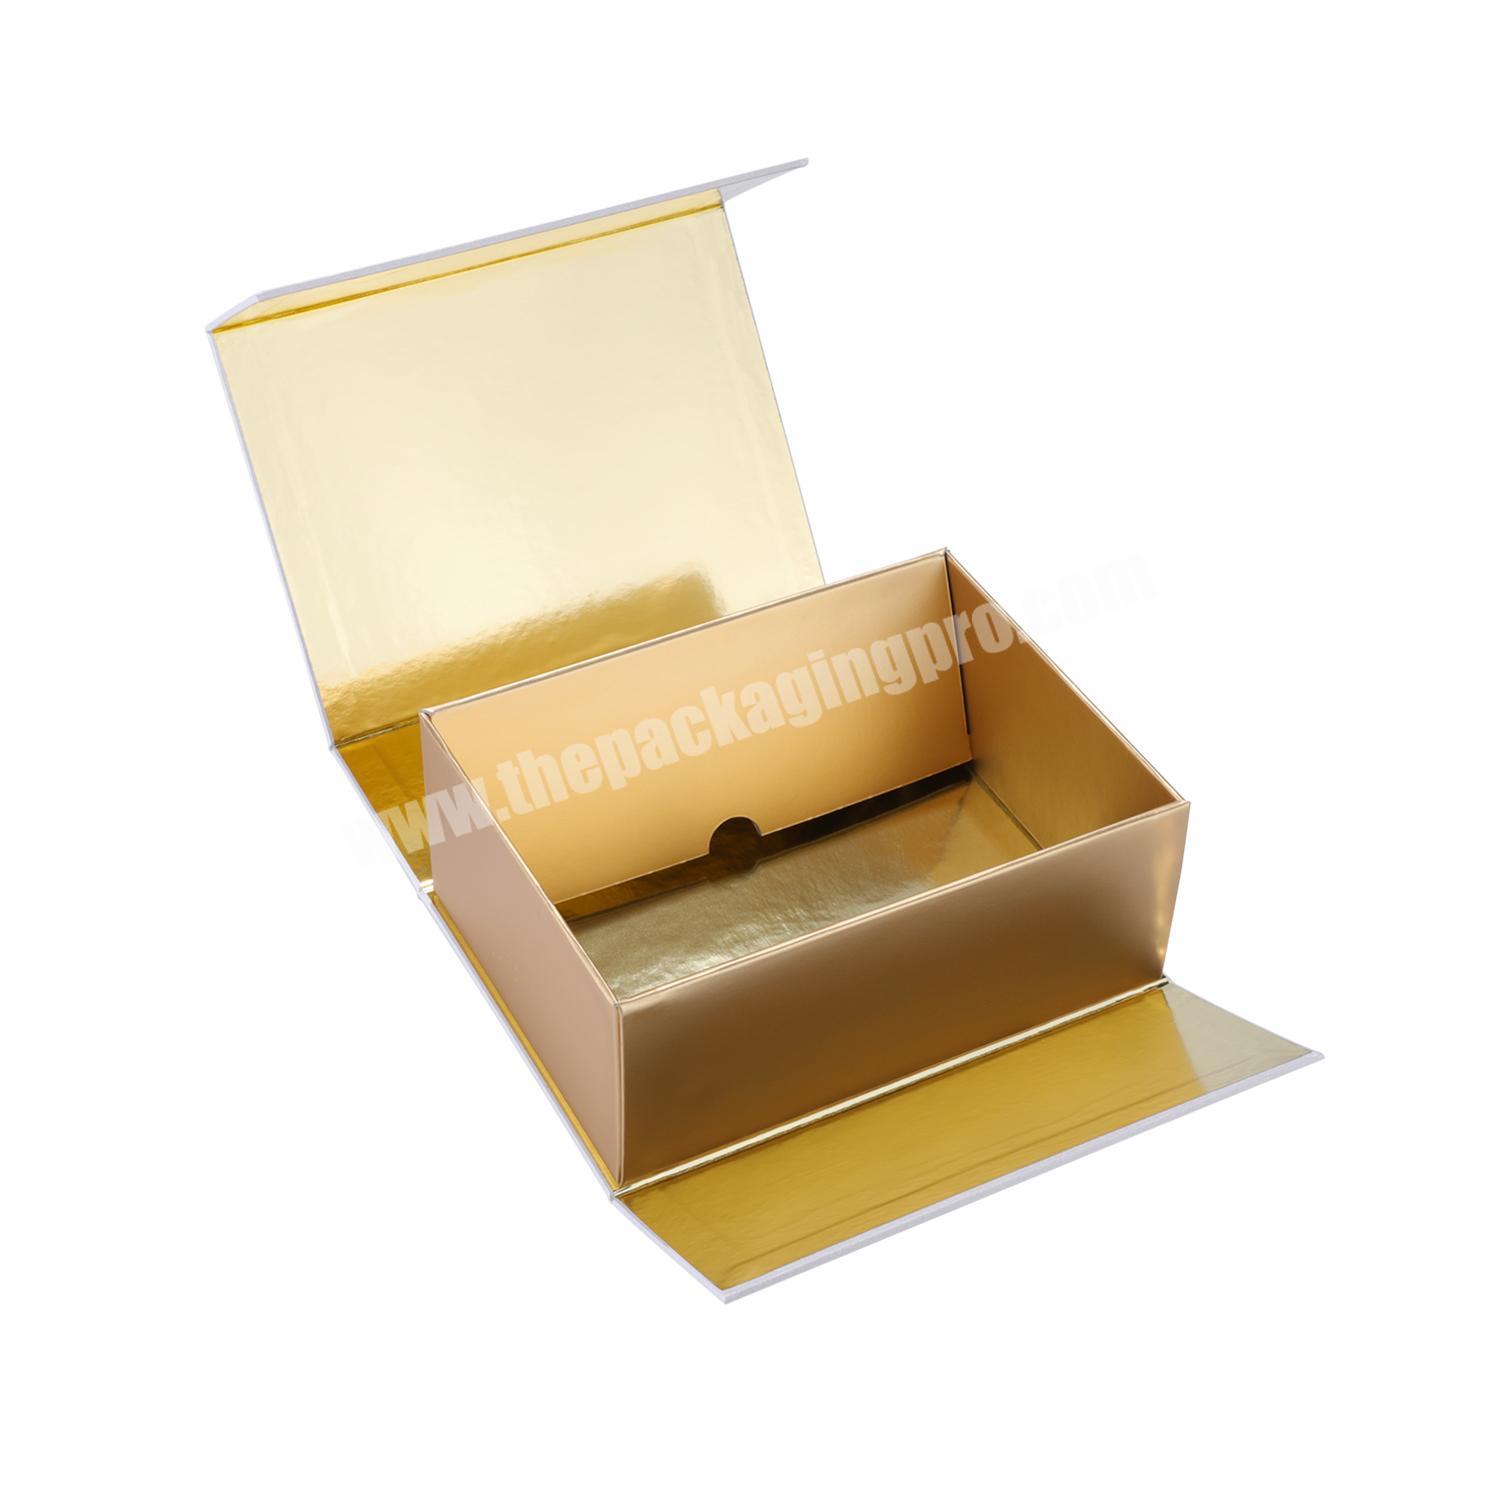 New Design Enhanced Version Folding Cardboard Box Double Walls Foldable Flat Luxury Paper Box